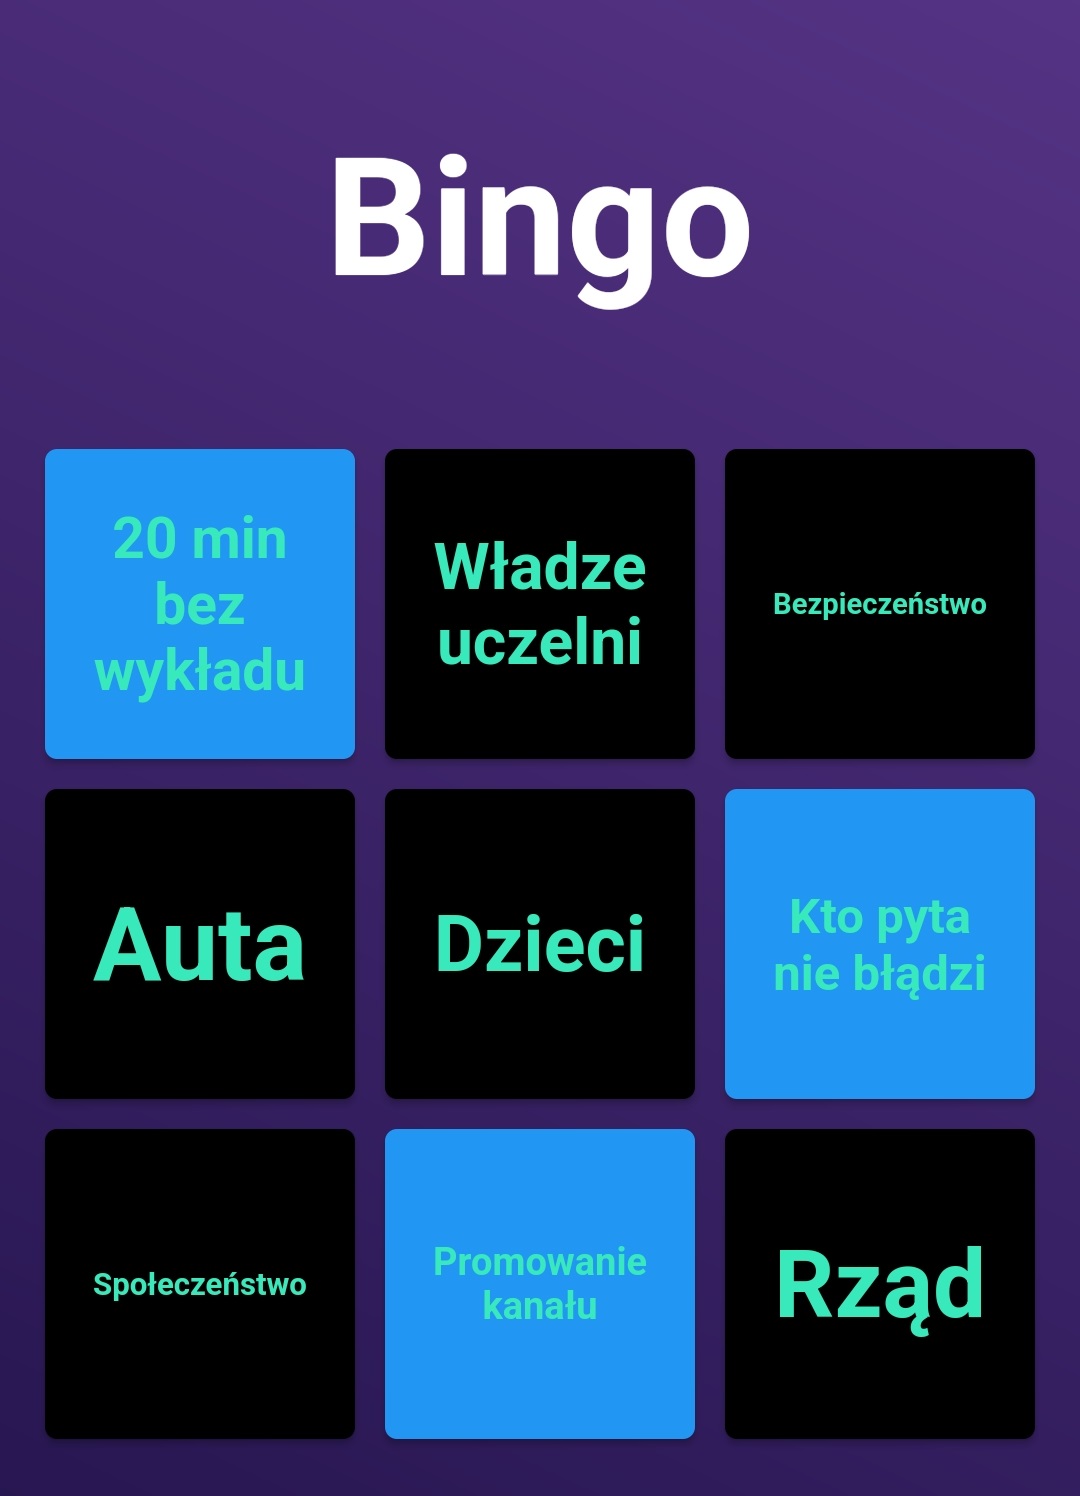 Bingo: A quotes app built using flutter